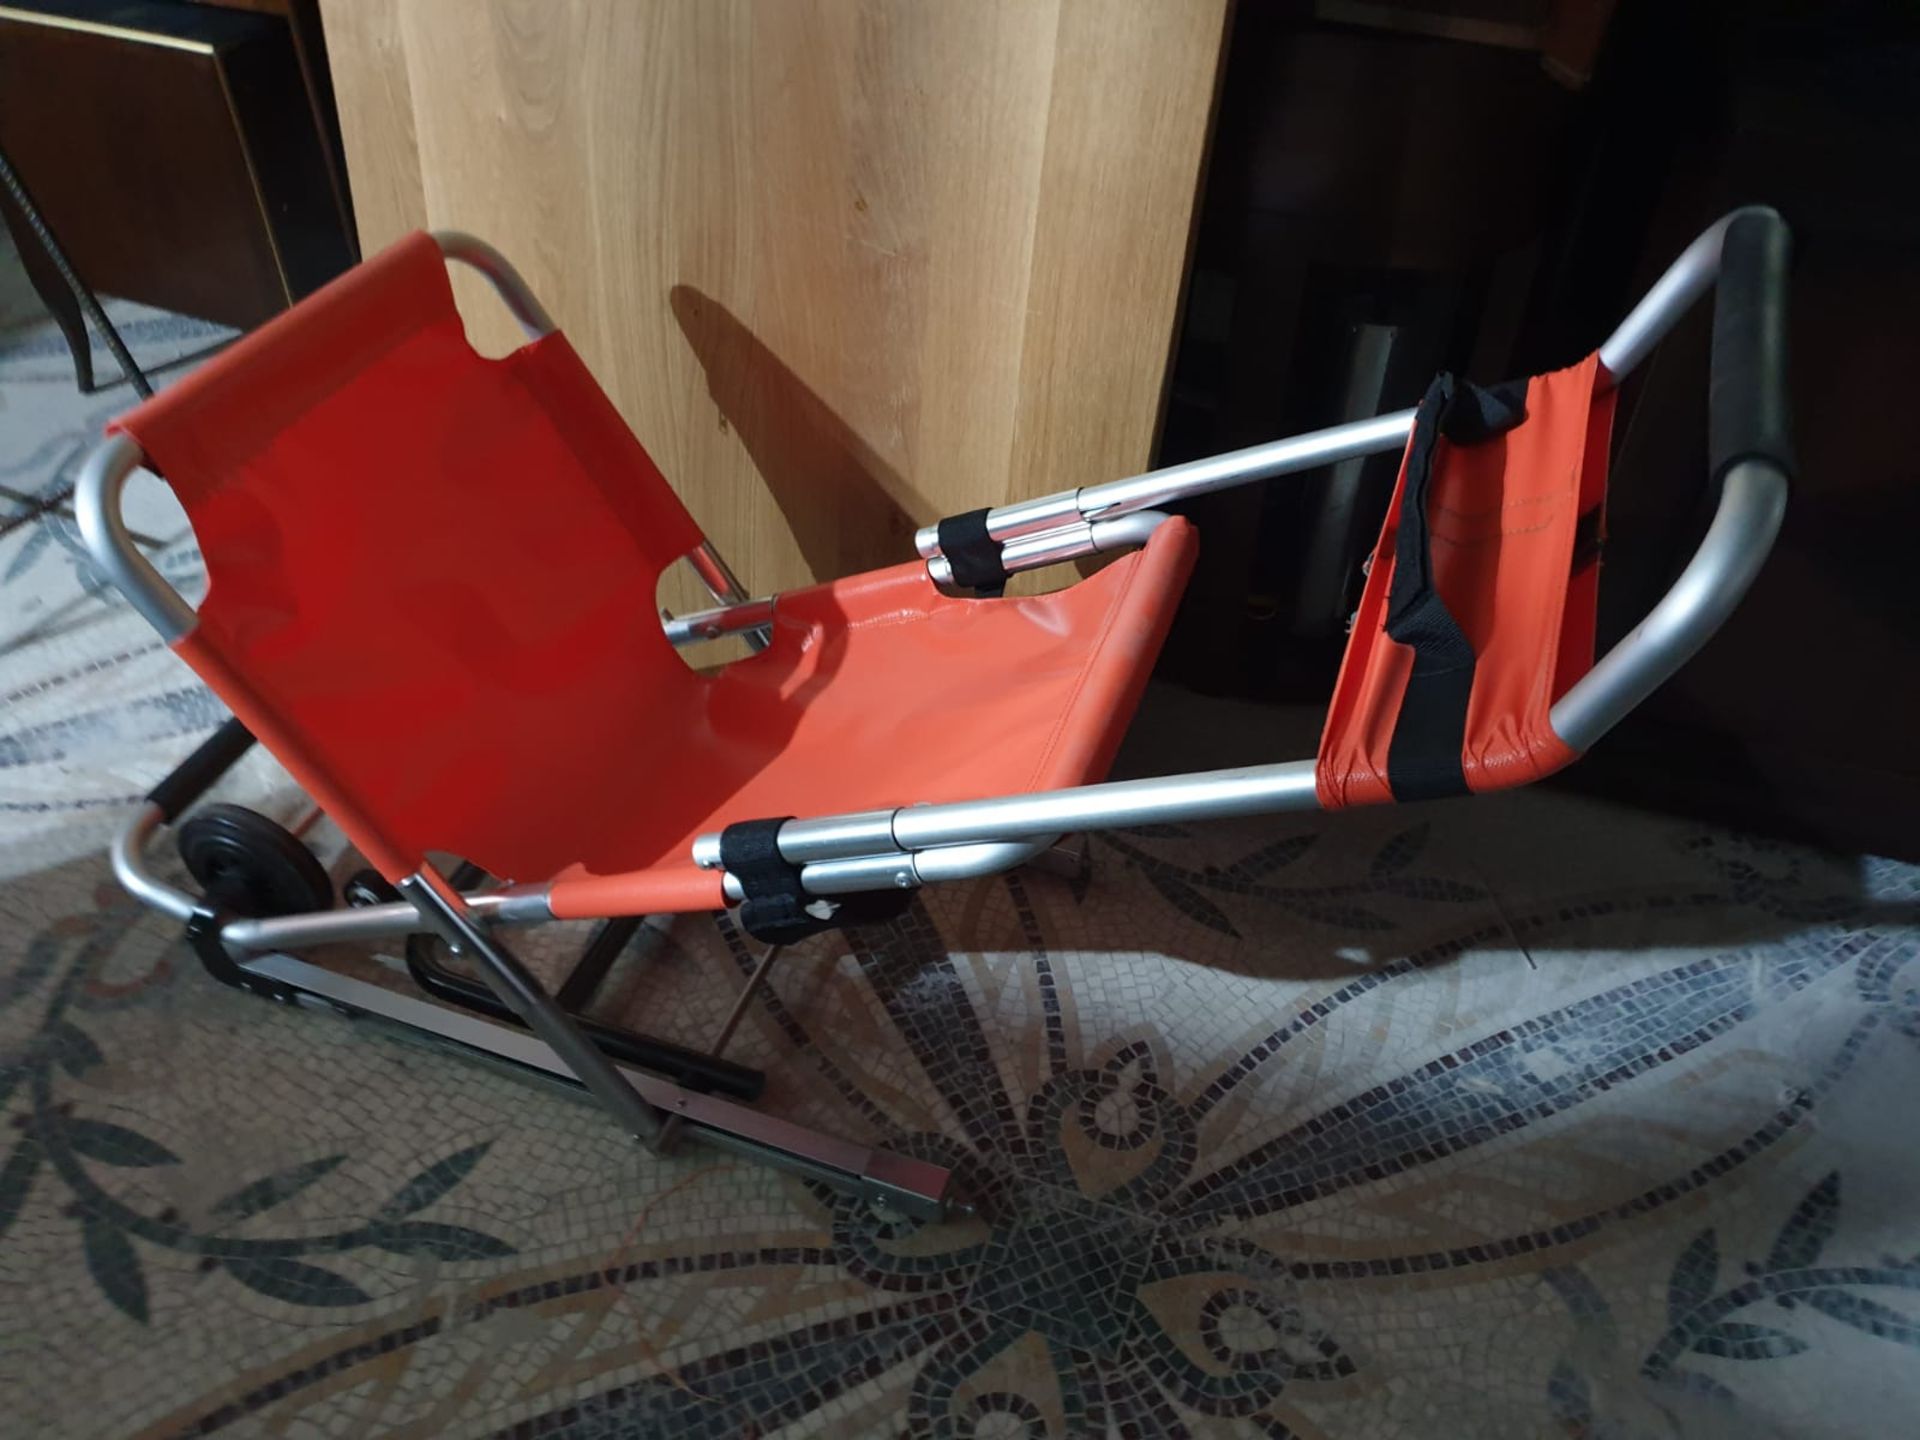 Relequip evacuation chair